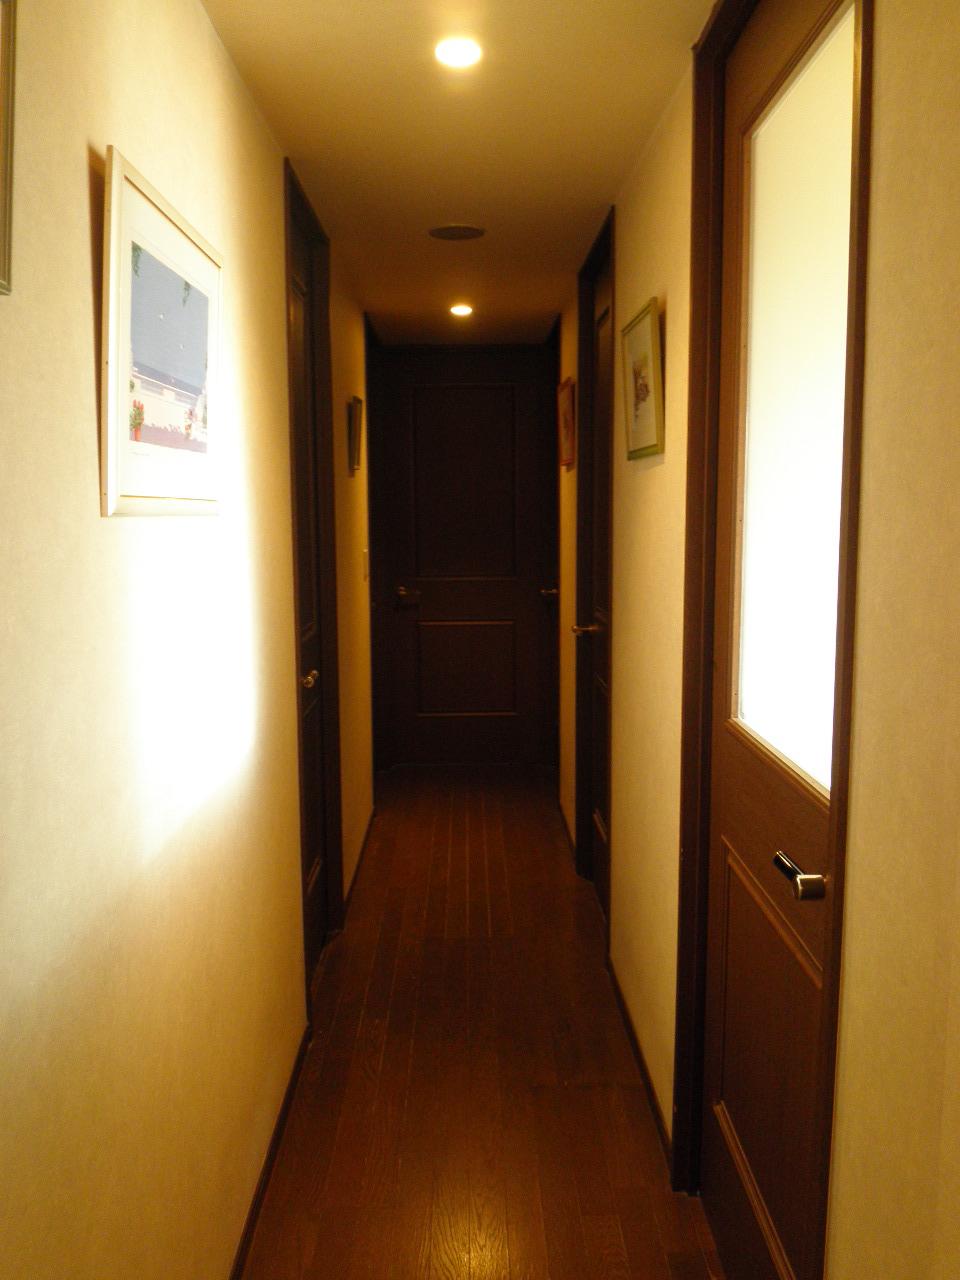 Other introspection. Corridor (December 2013) Shooting